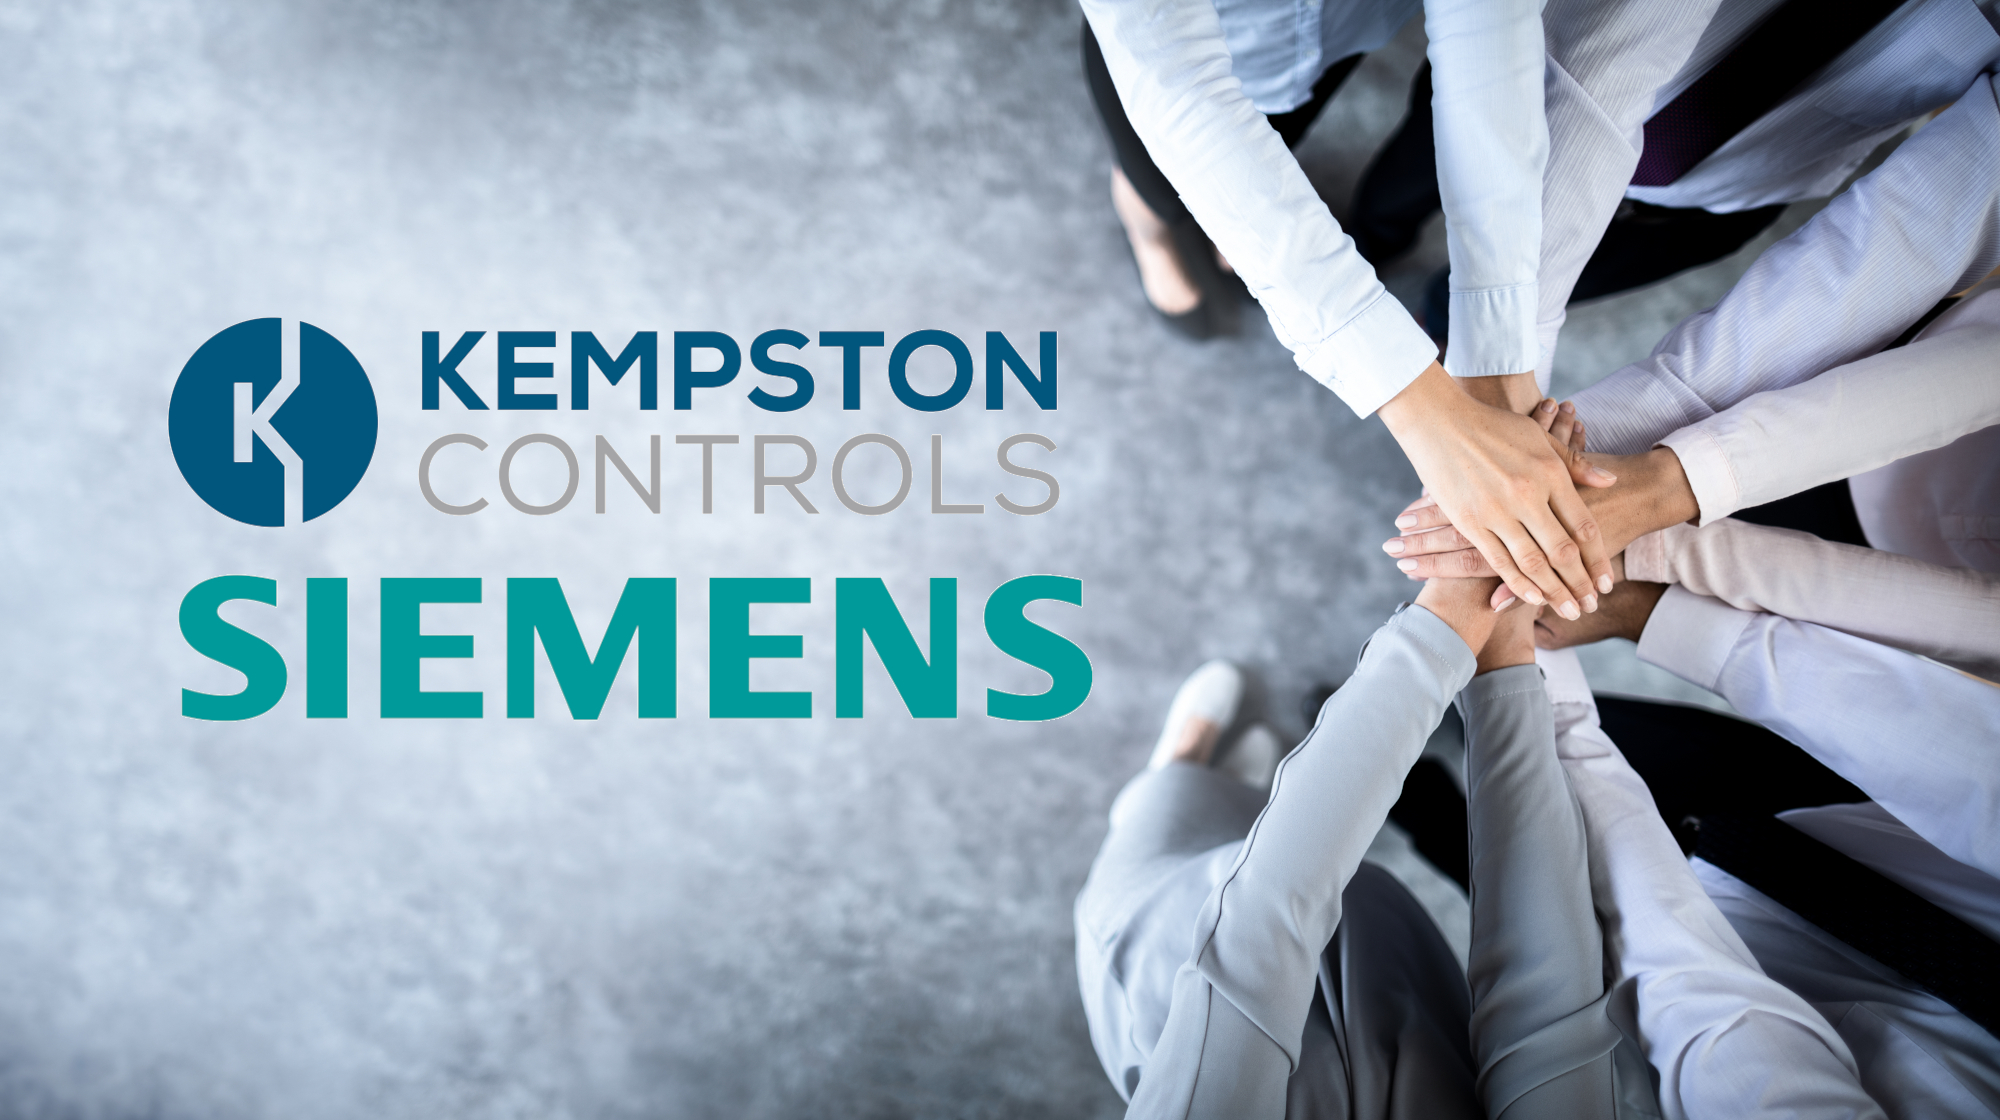 Kempston Controls and Siemens